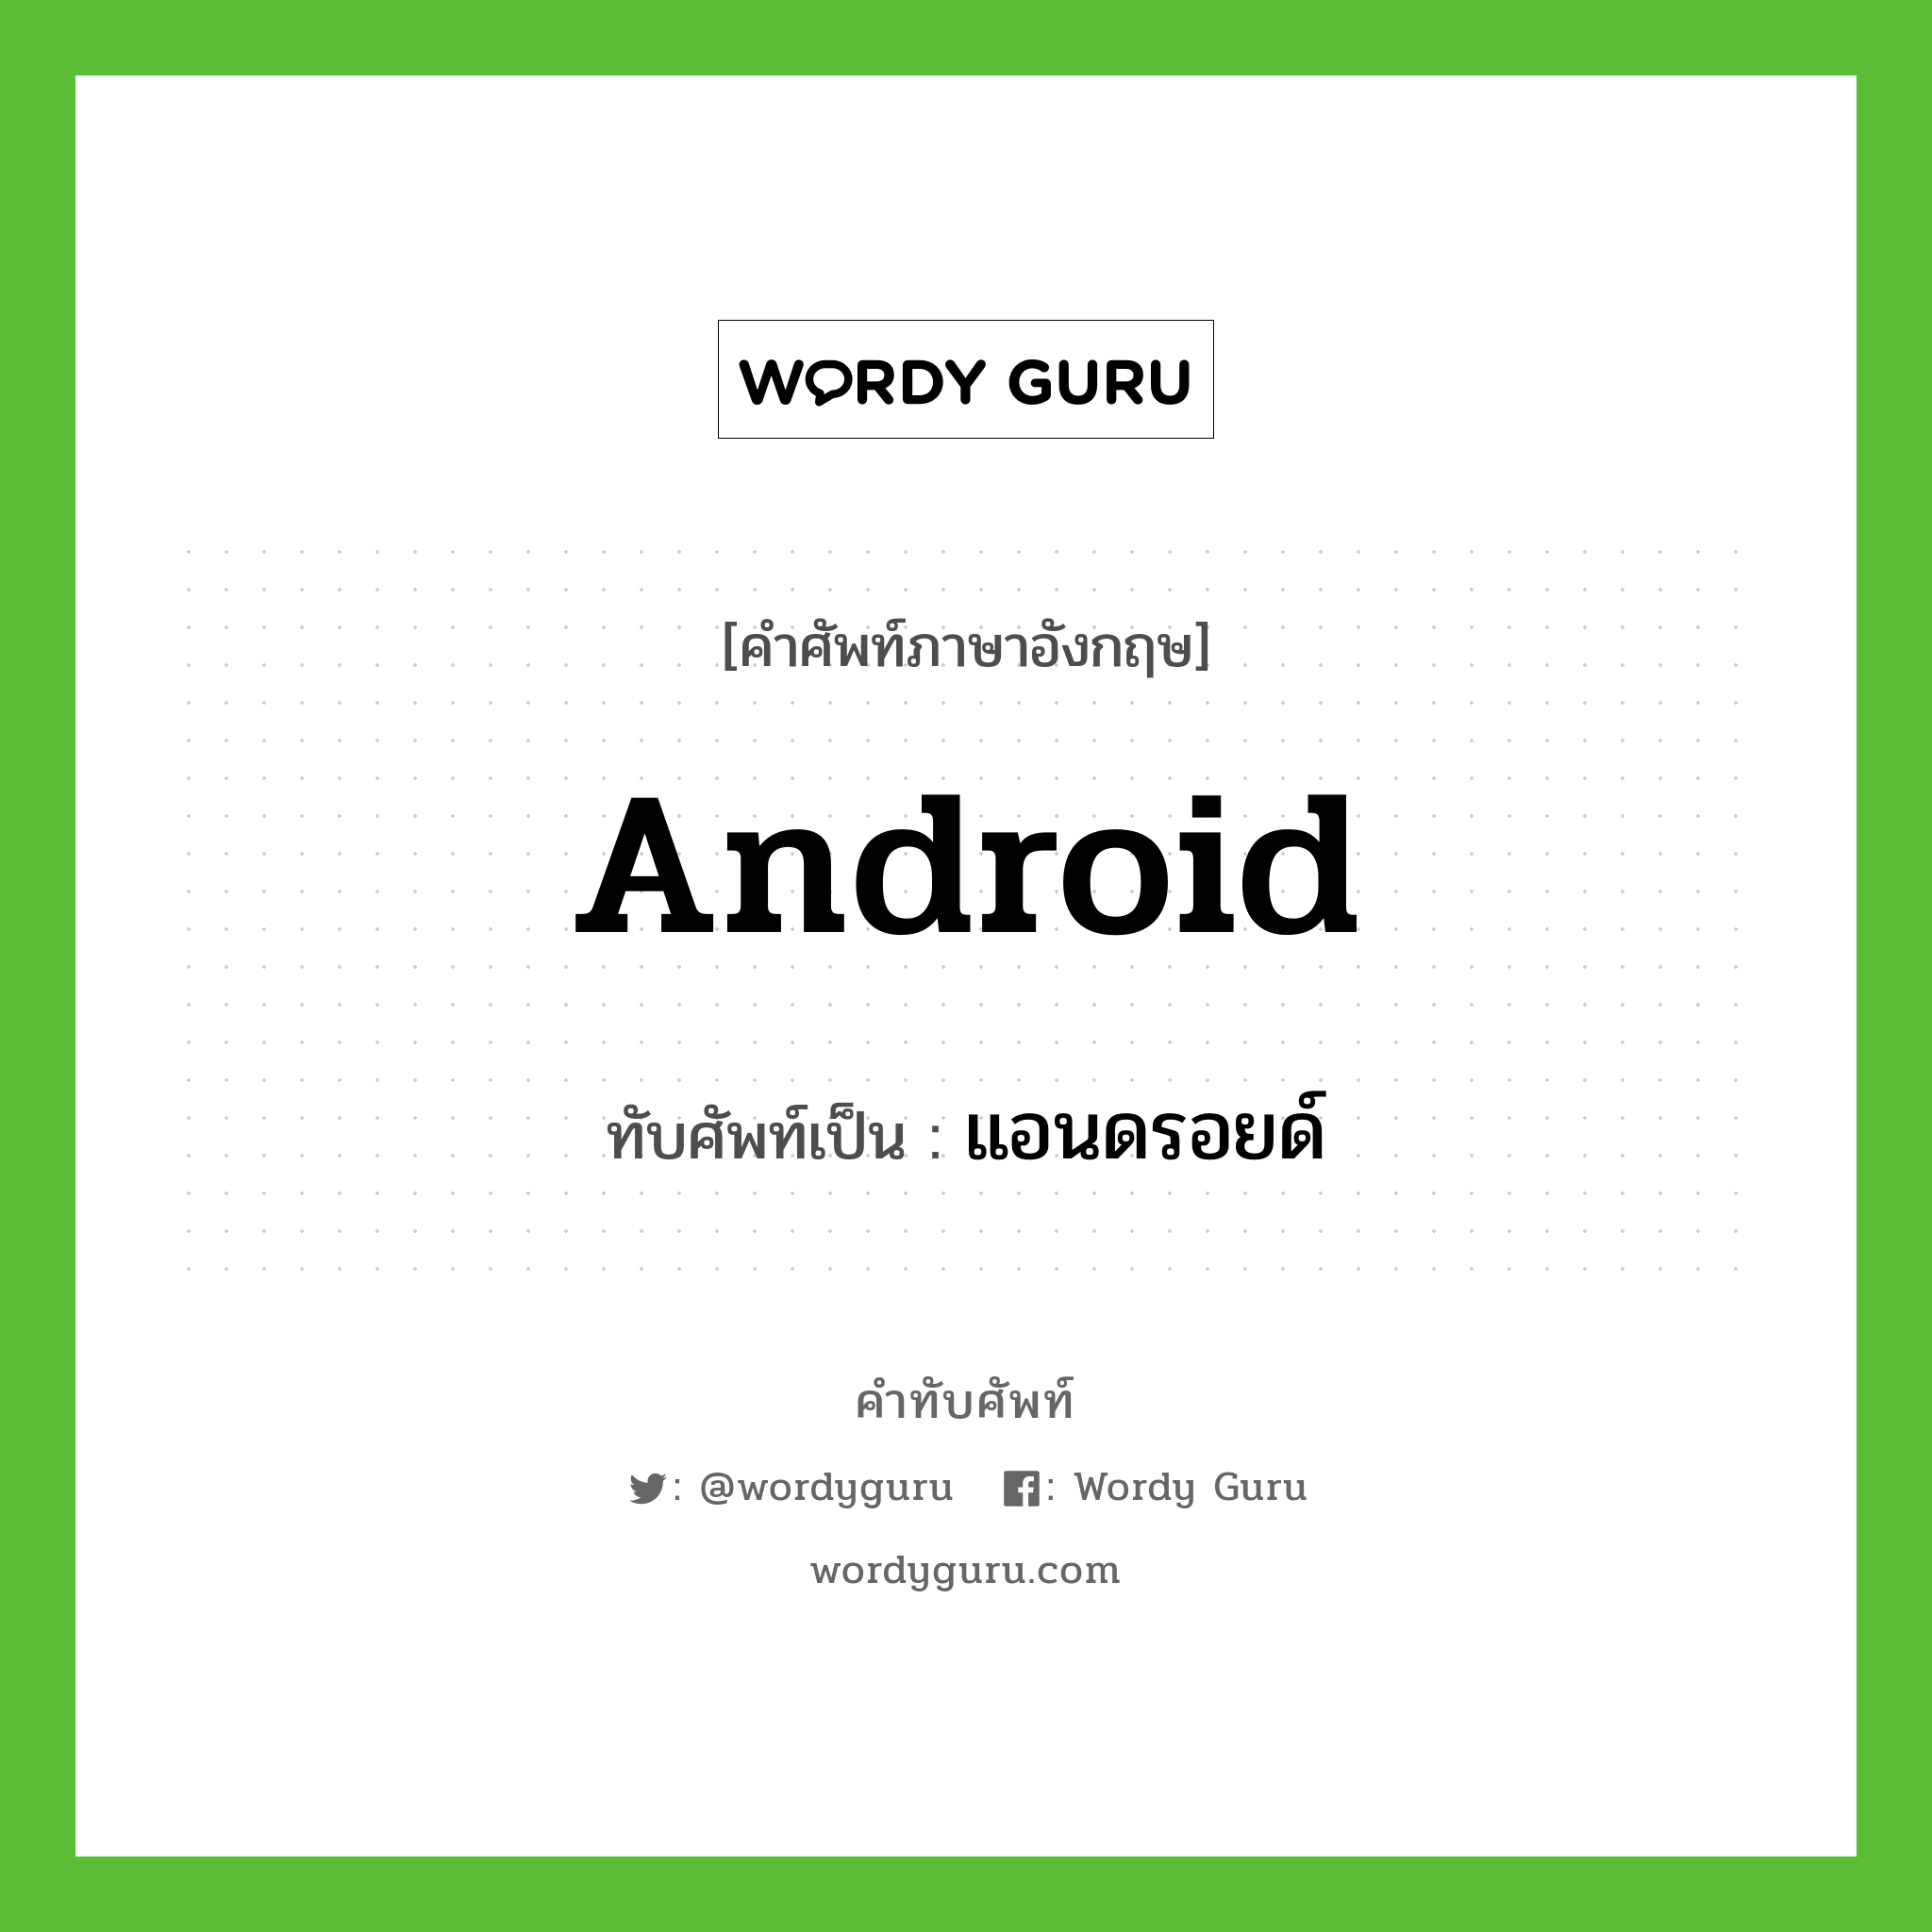 android เขียนเป็นคำไทยว่าอะไร?, คำศัพท์ภาษาอังกฤษ android ทับศัพท์เป็น แอนดรอยด์